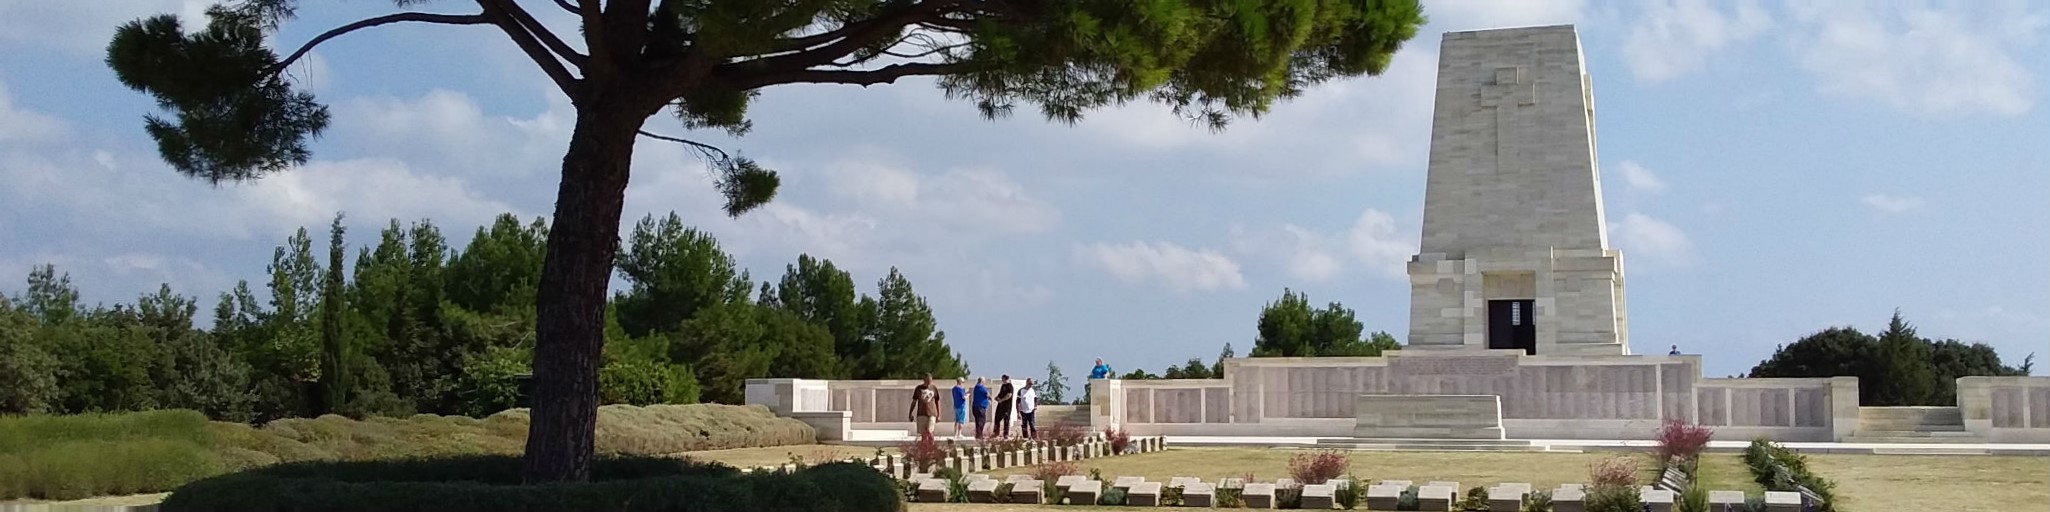 Lone Pine Cemetery and Memorial, Eceabat District, Çanakkale Province